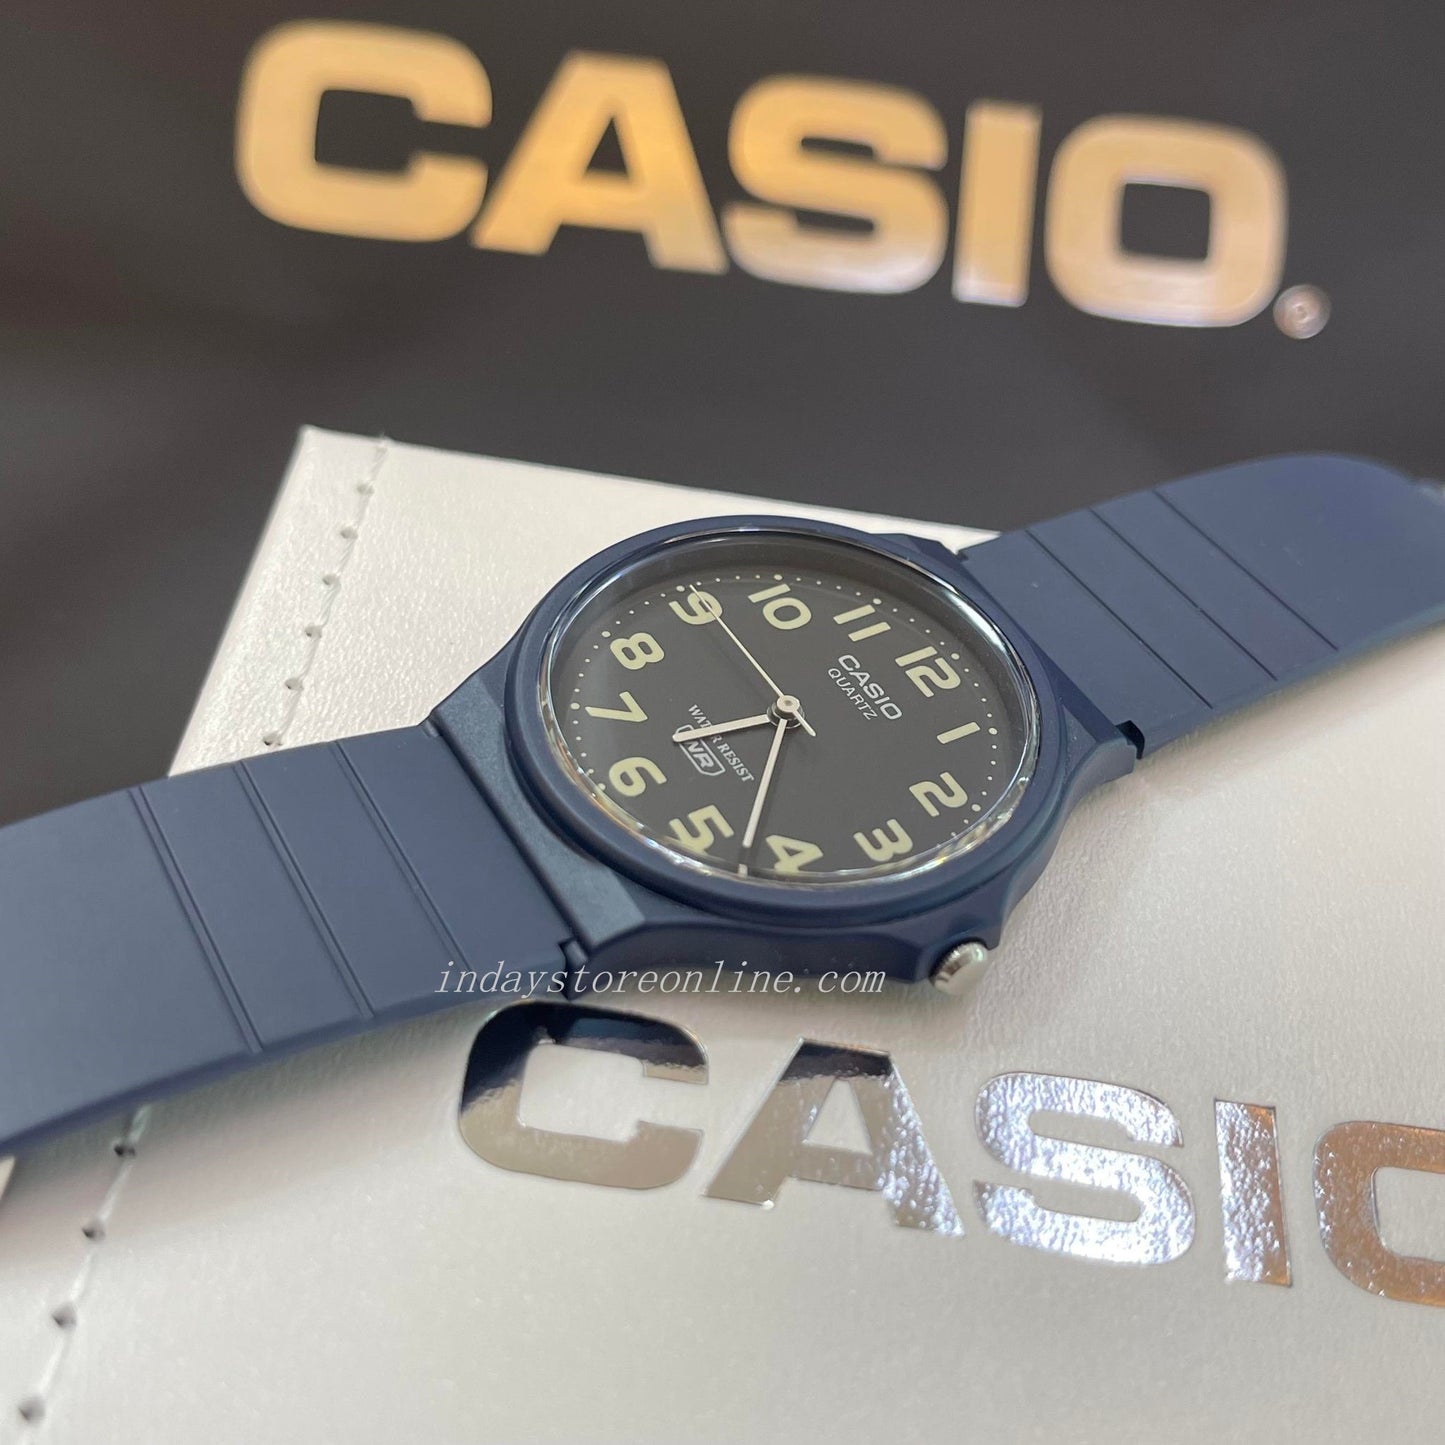 Casio Analog Women's Watch MQ-24UC-2B Resin Glass Blue Color Resin Strap Watch